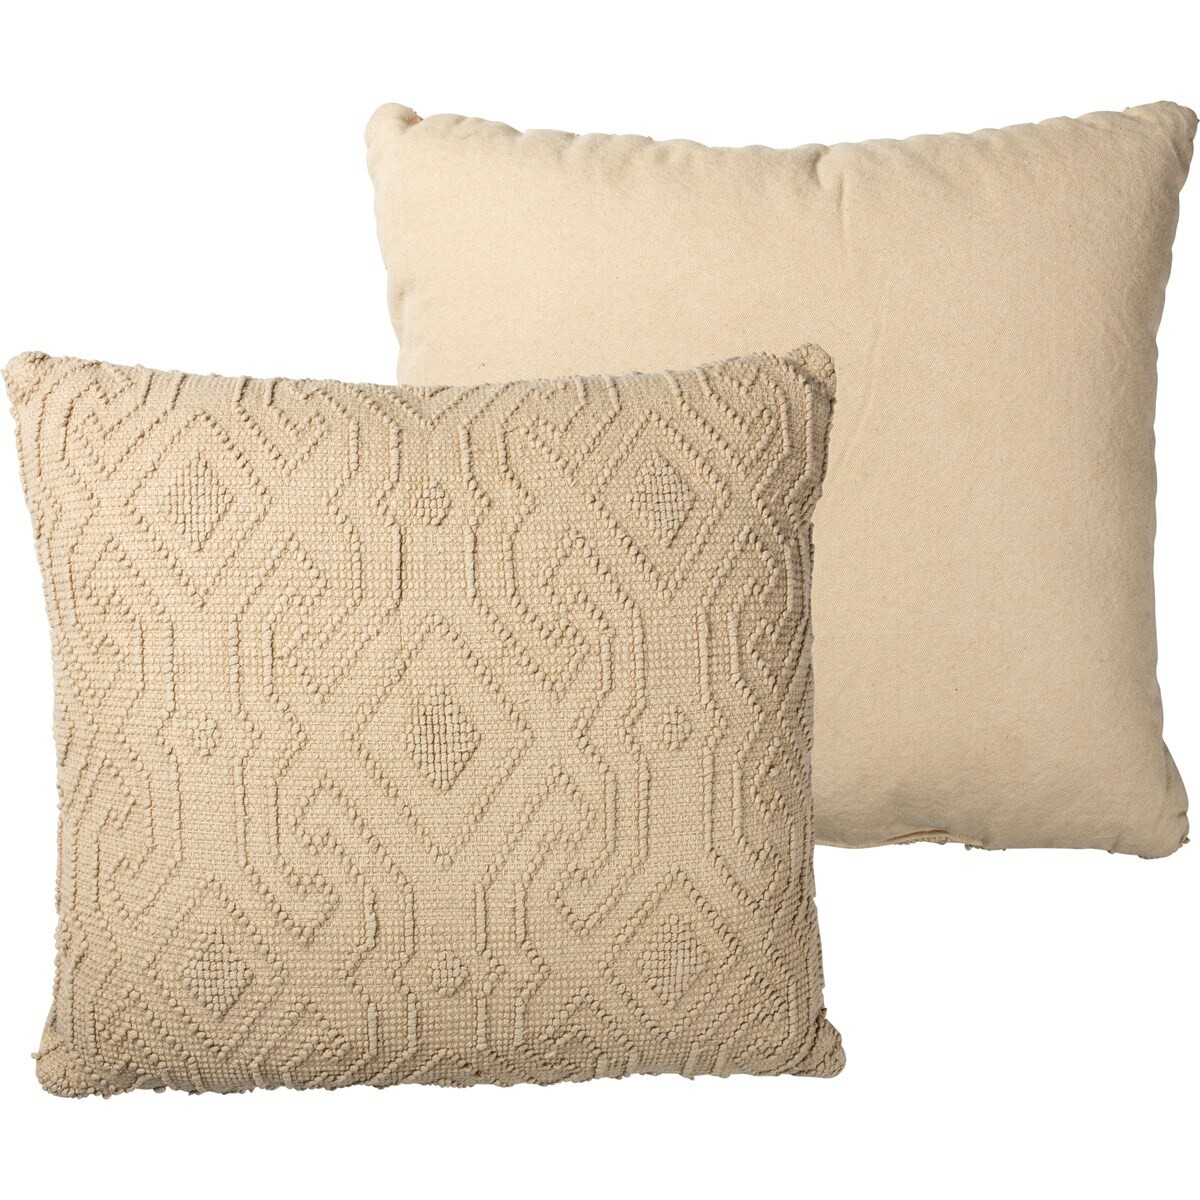 Cream Geometric Patterned Pillow